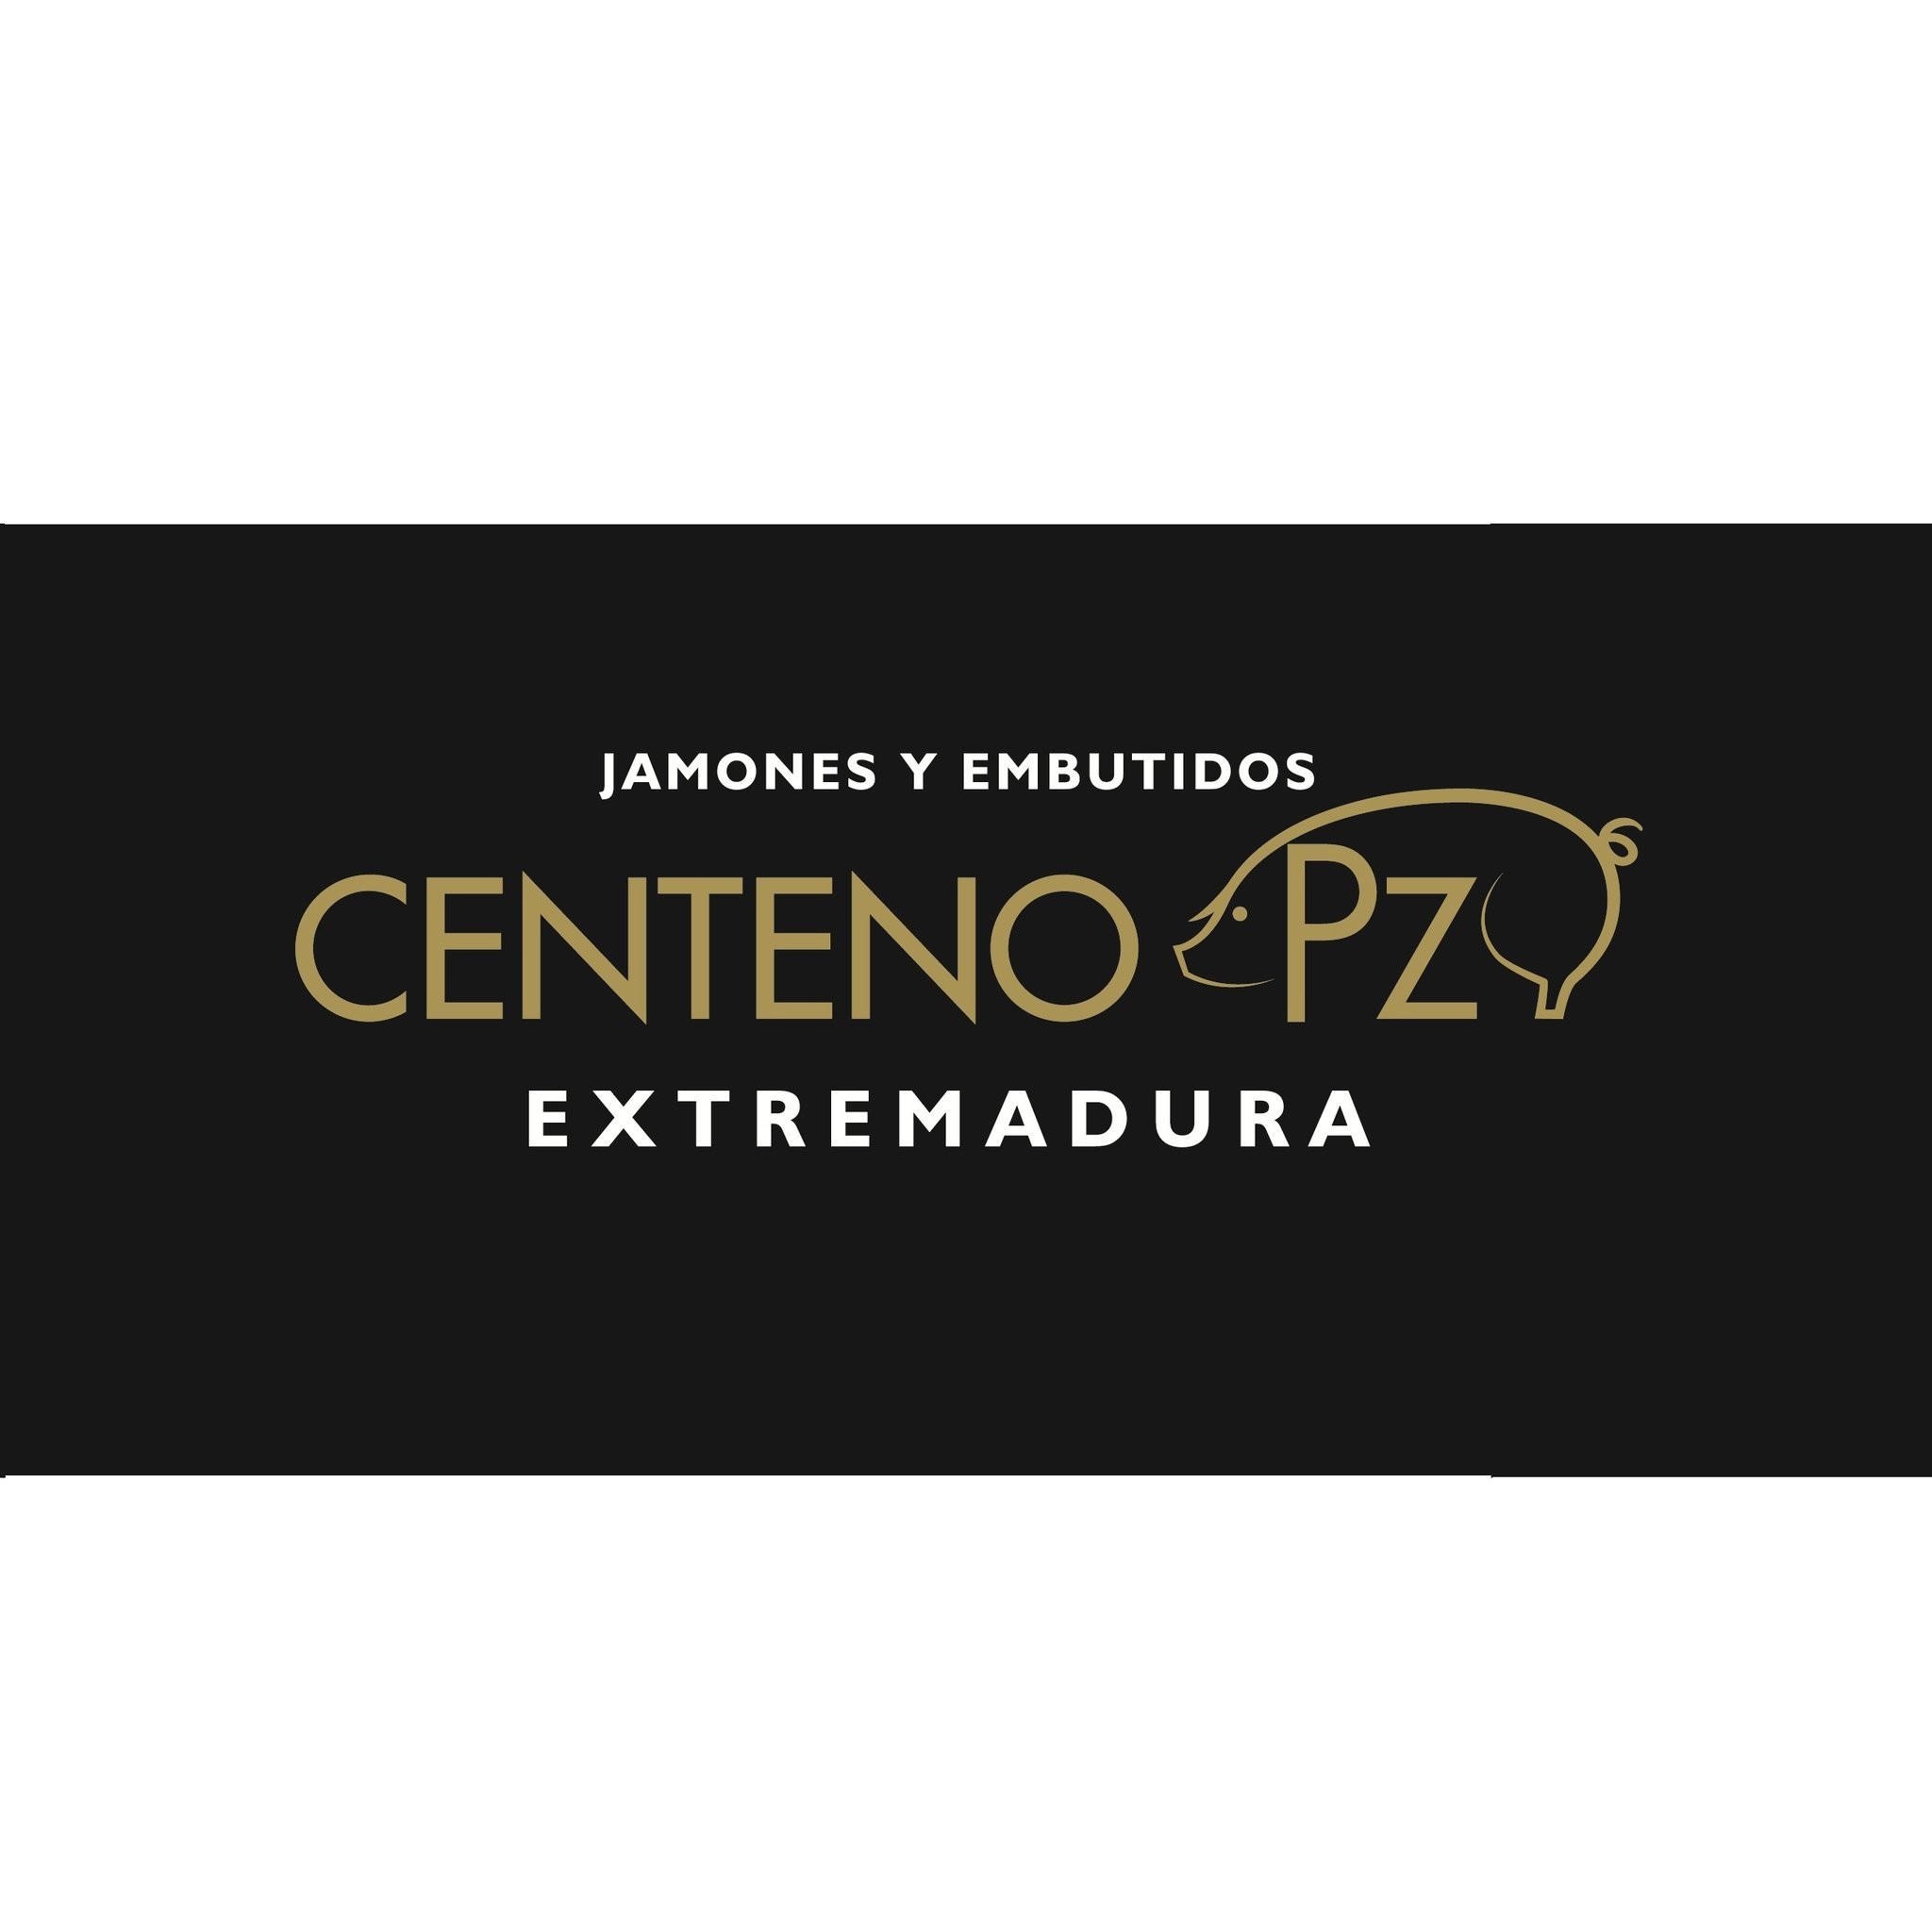 Centeno Pozo Extremadura